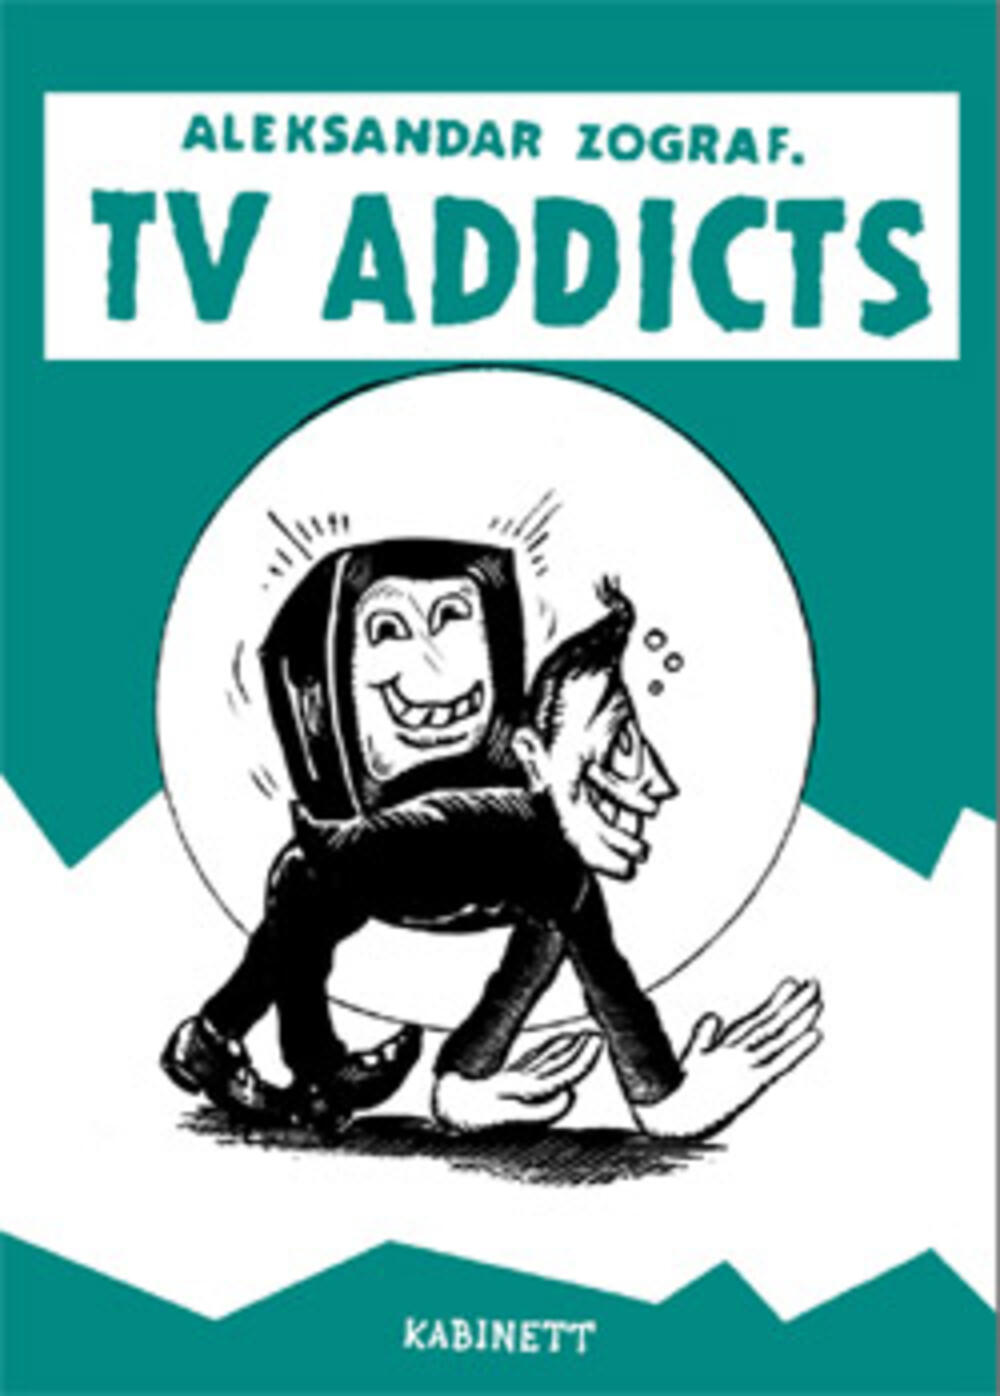 TV addicts